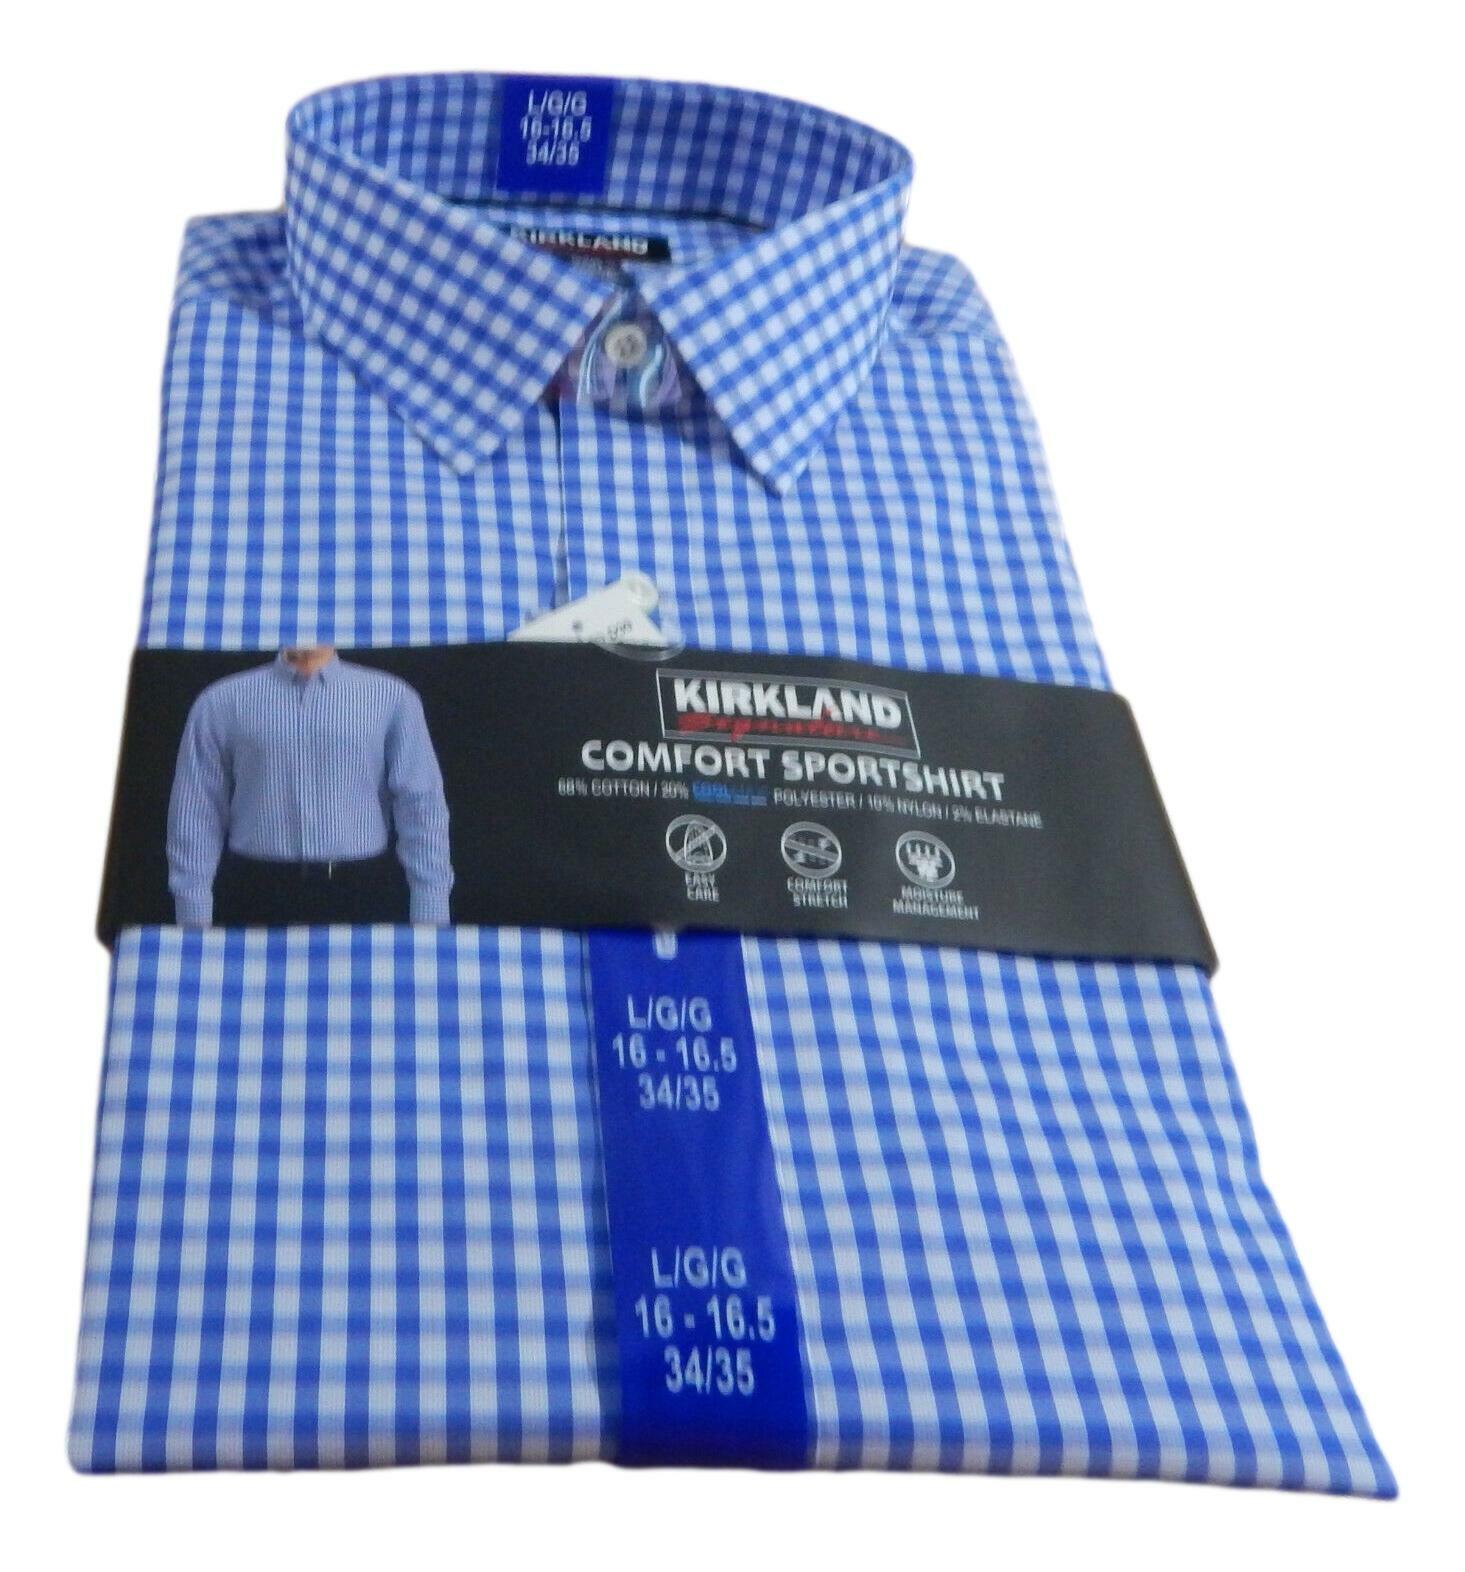 Kirkland Signature Men's Traditional Dress Shirt (Blue Check, X-Large, 17-17.5 X34/35)